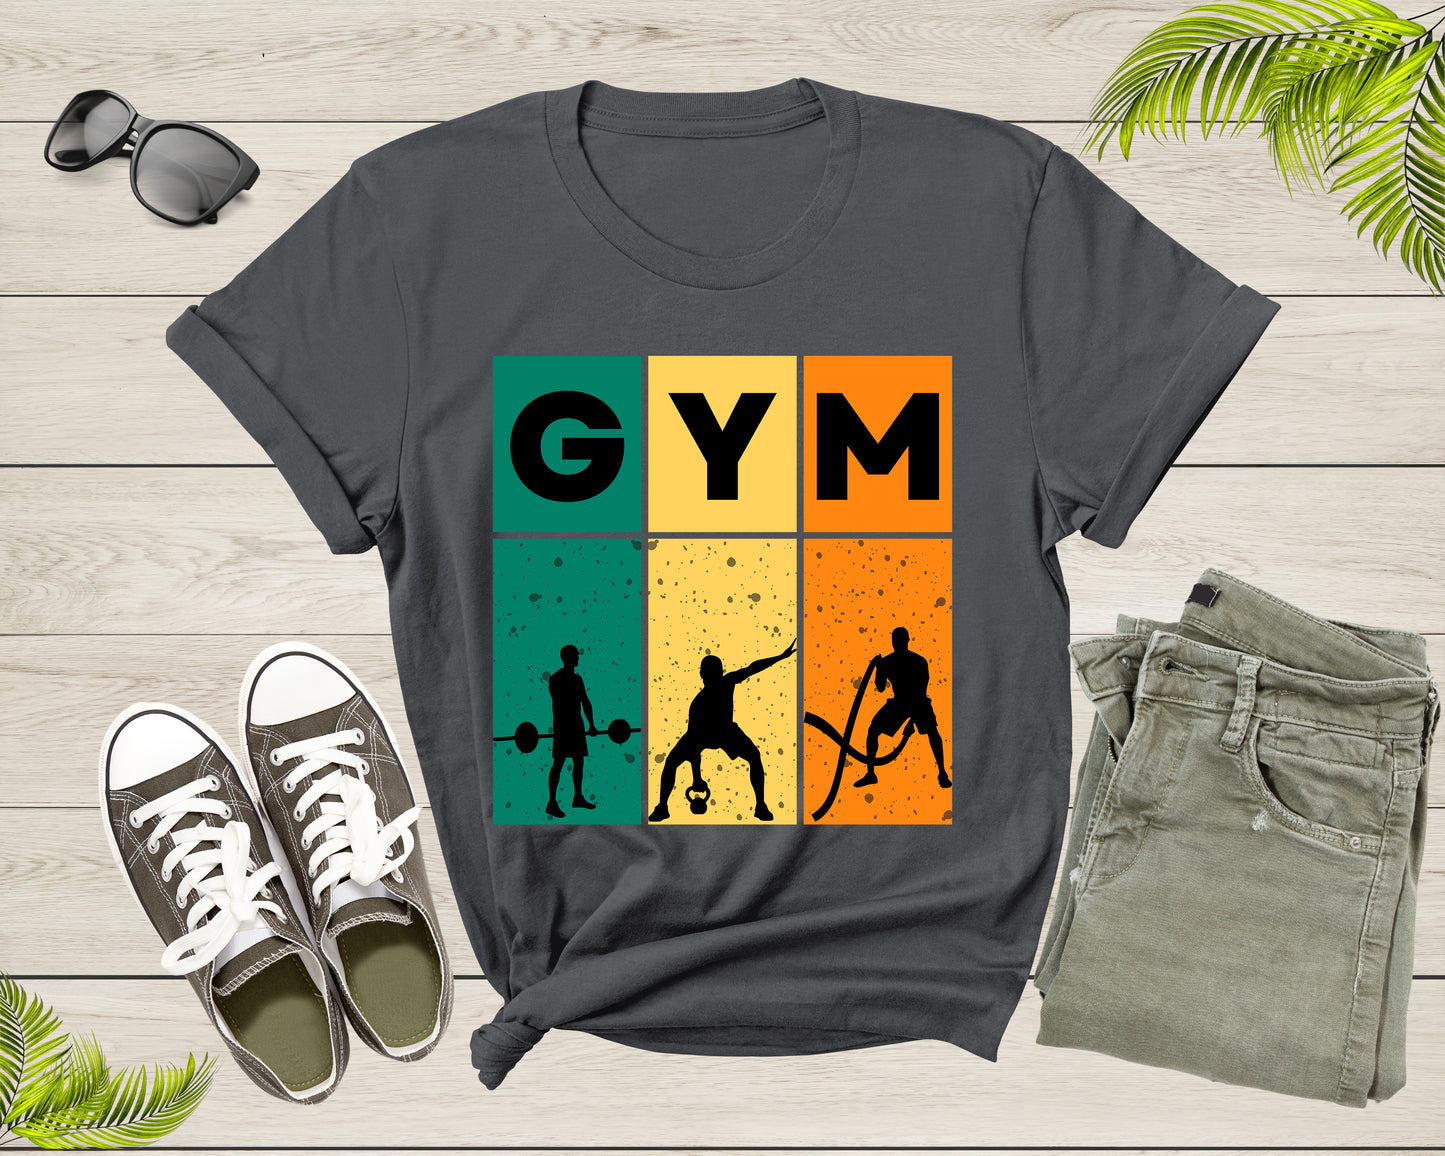 Cool GYM Gymnasium Workout Sport Fitness Cardio Motivational T-Shirt GYM Workout T Shirt Gift for Men Women Kids Boys Girls Gymnasium Tshirt